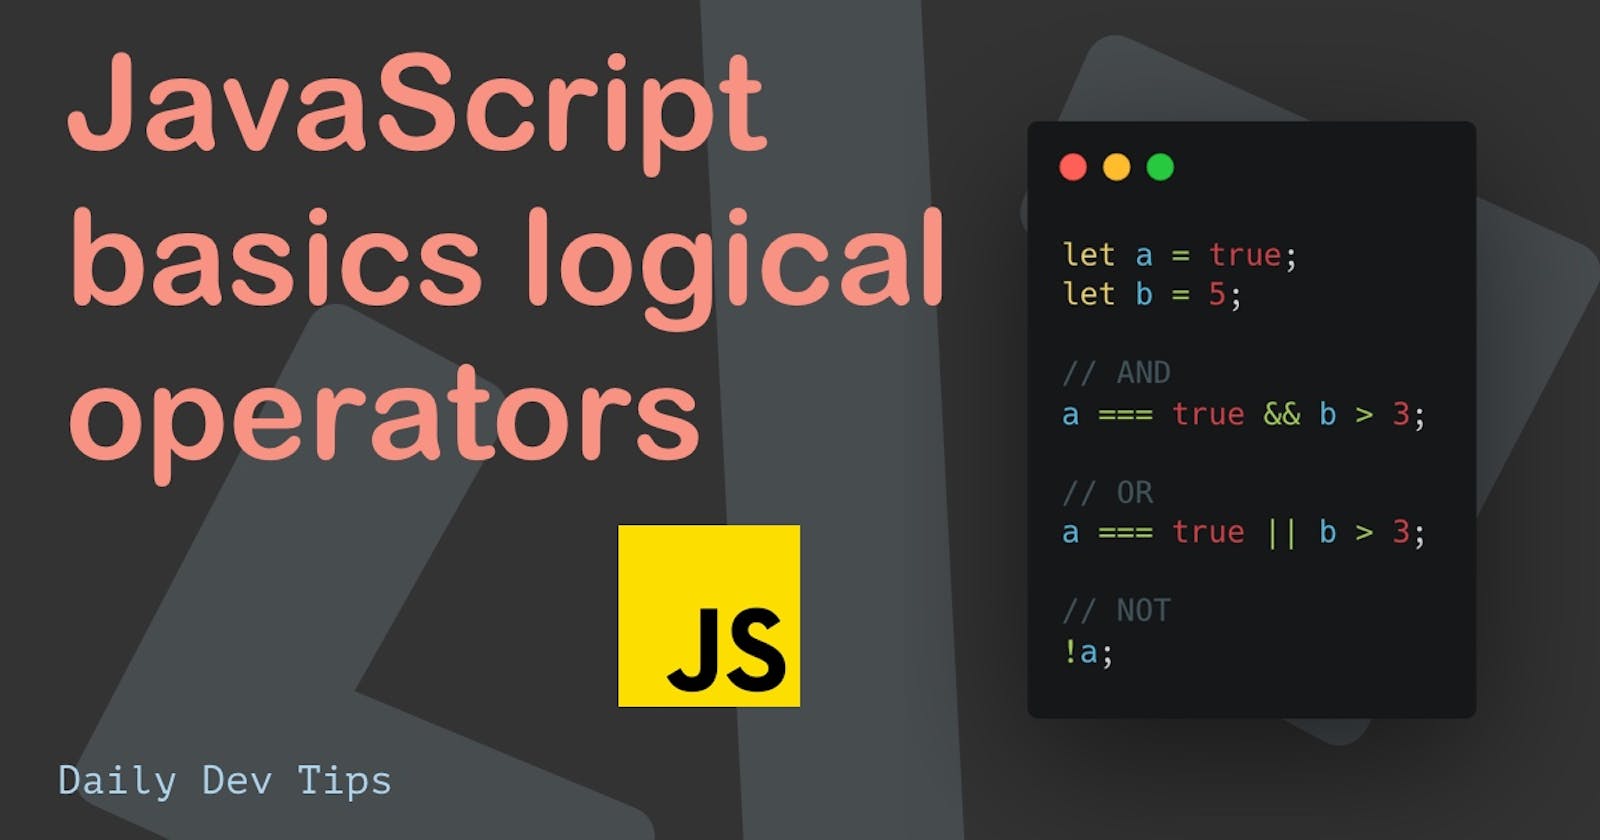 JavaScript basics logical operators